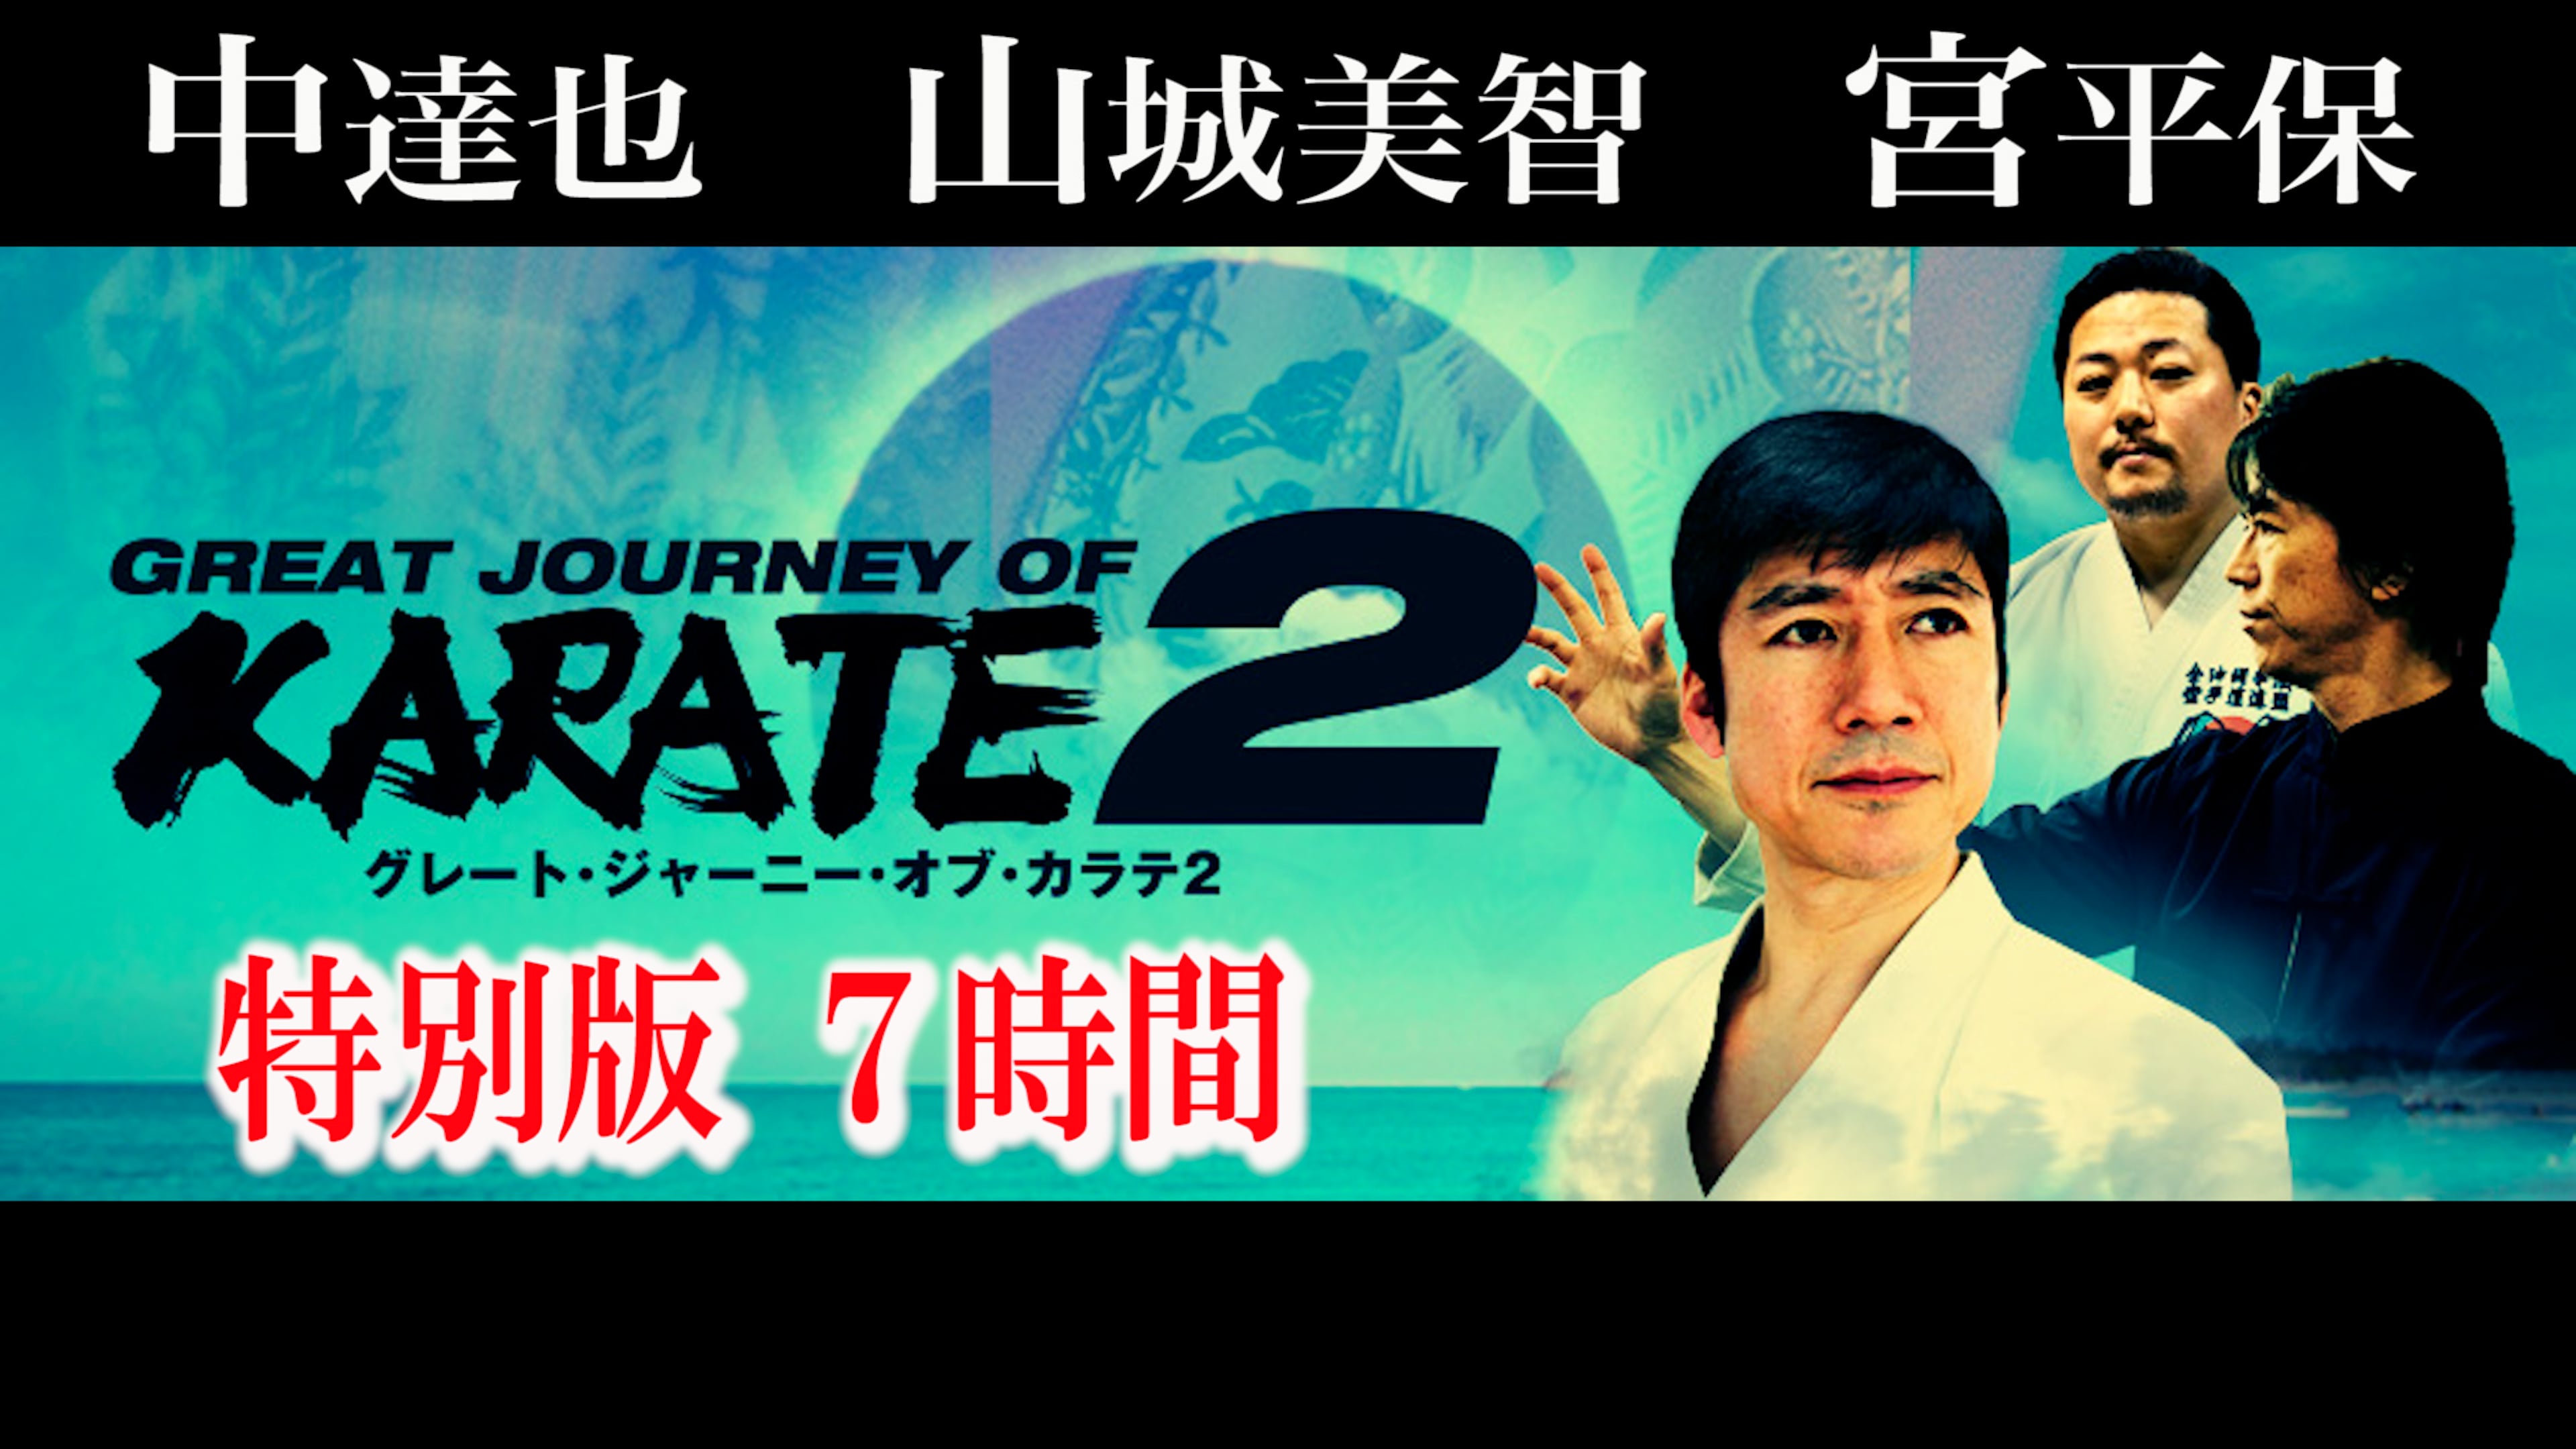 Watch 【特別版】GREAT JOURNEY OF KARATE 2（7時間30分） Online | Vimeo On Demand